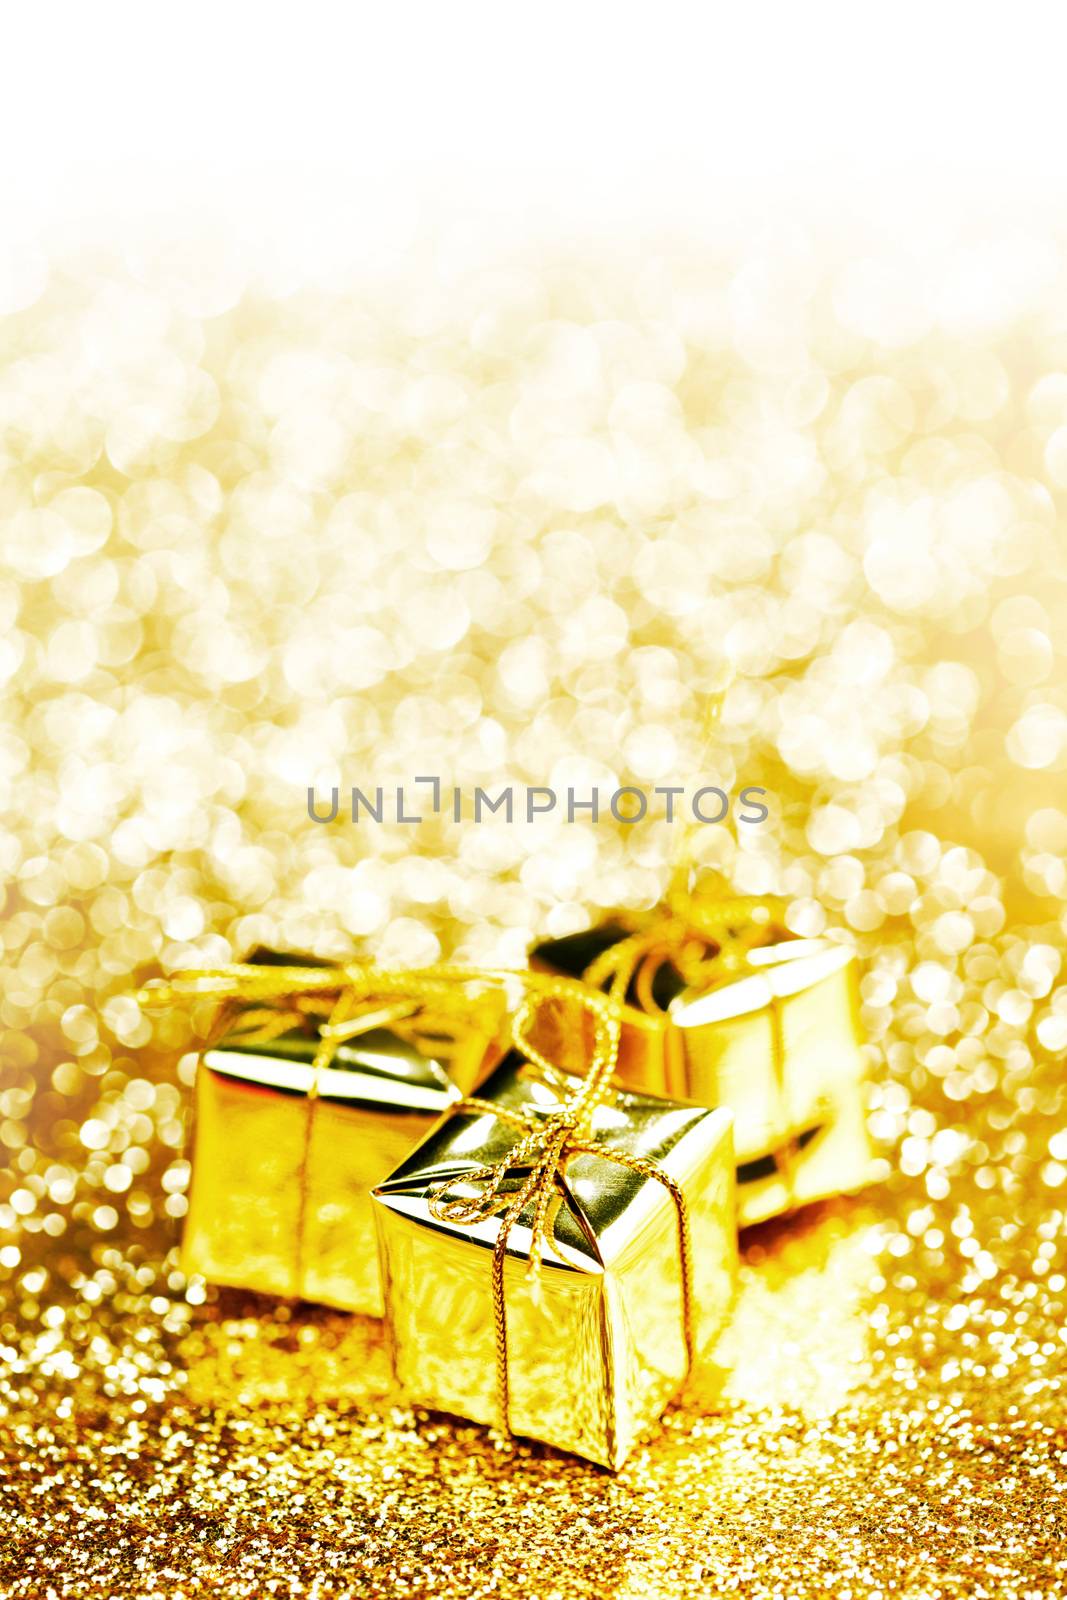 Decorative holiday gift boxes on bright shiny background